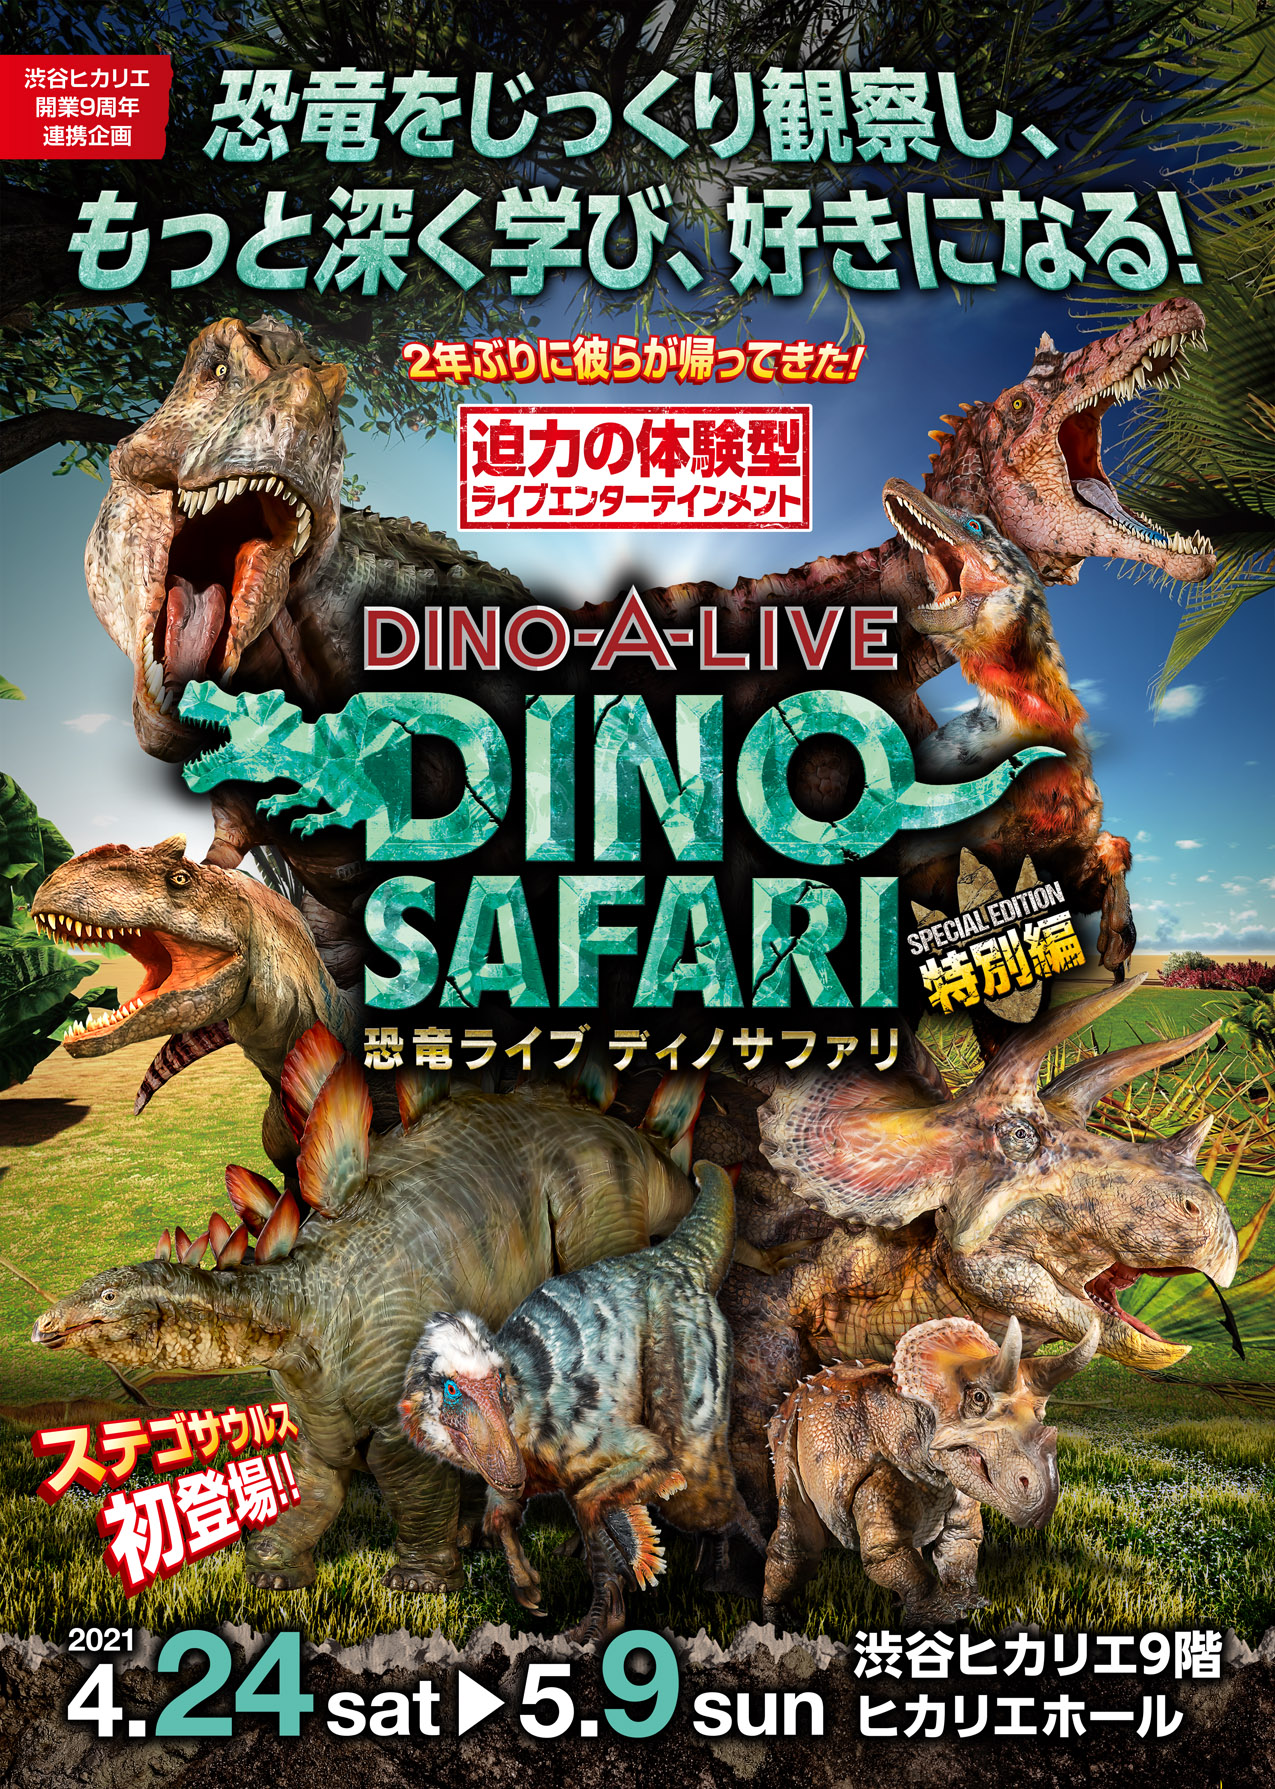 Dino Safari 5th Anniversary 体験型ライブエンターテインメント Dino Safari が感染症対策を行い2年ぶりに 特別編 として渋谷にて開催決定 株式会社on Artのプレスリリース